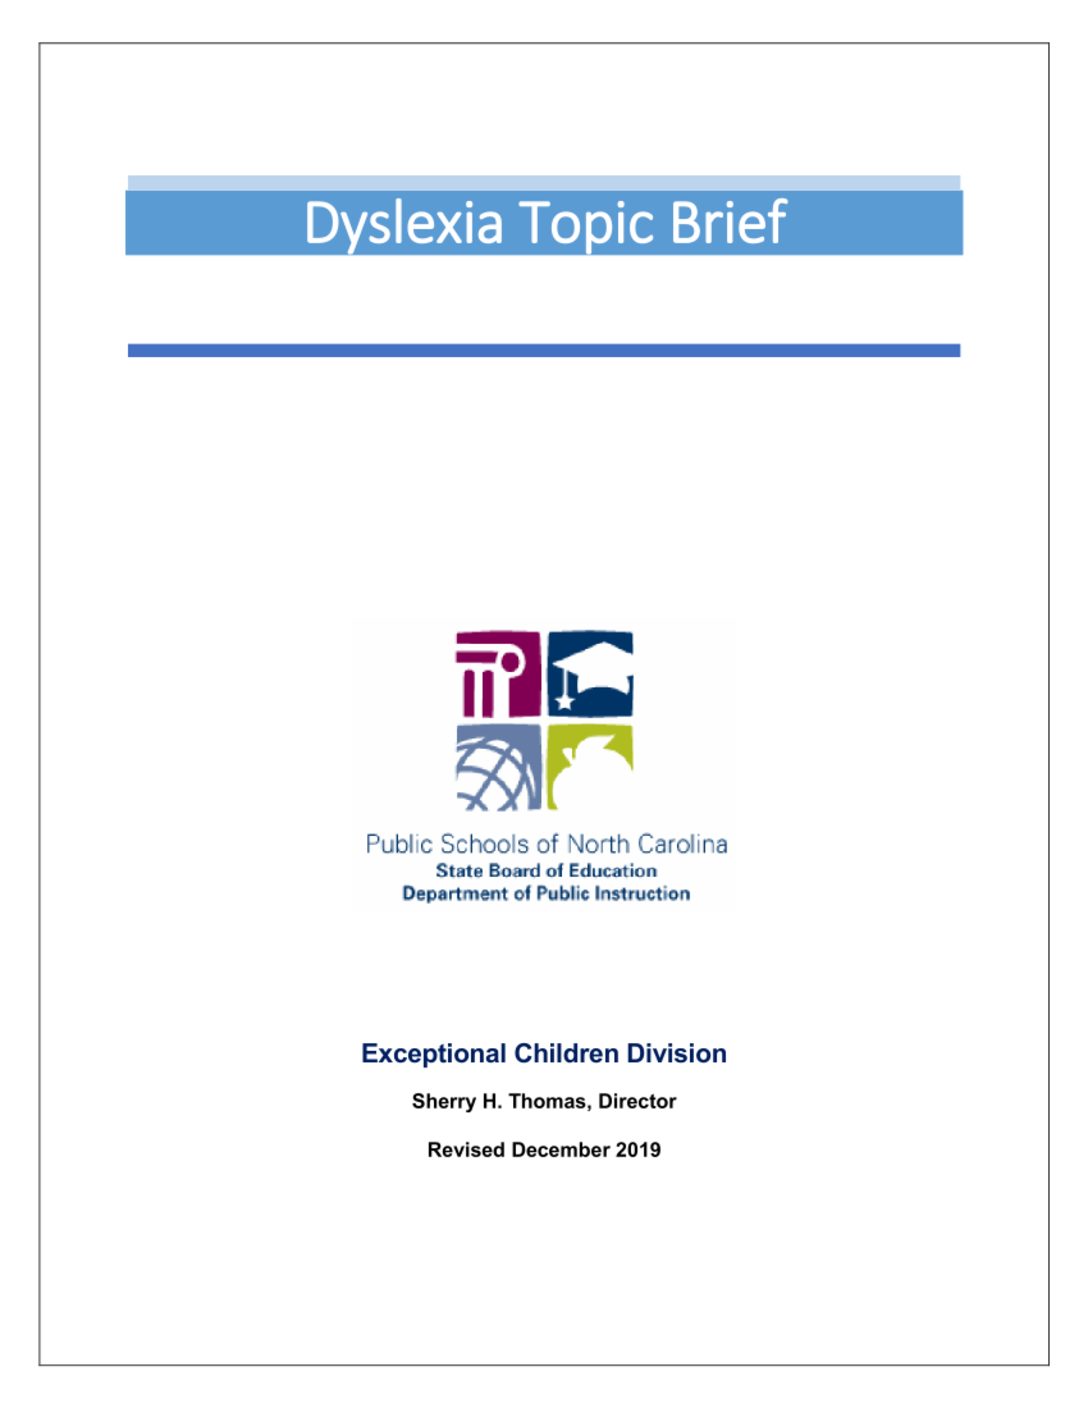 dyslexia-topic-brief-image